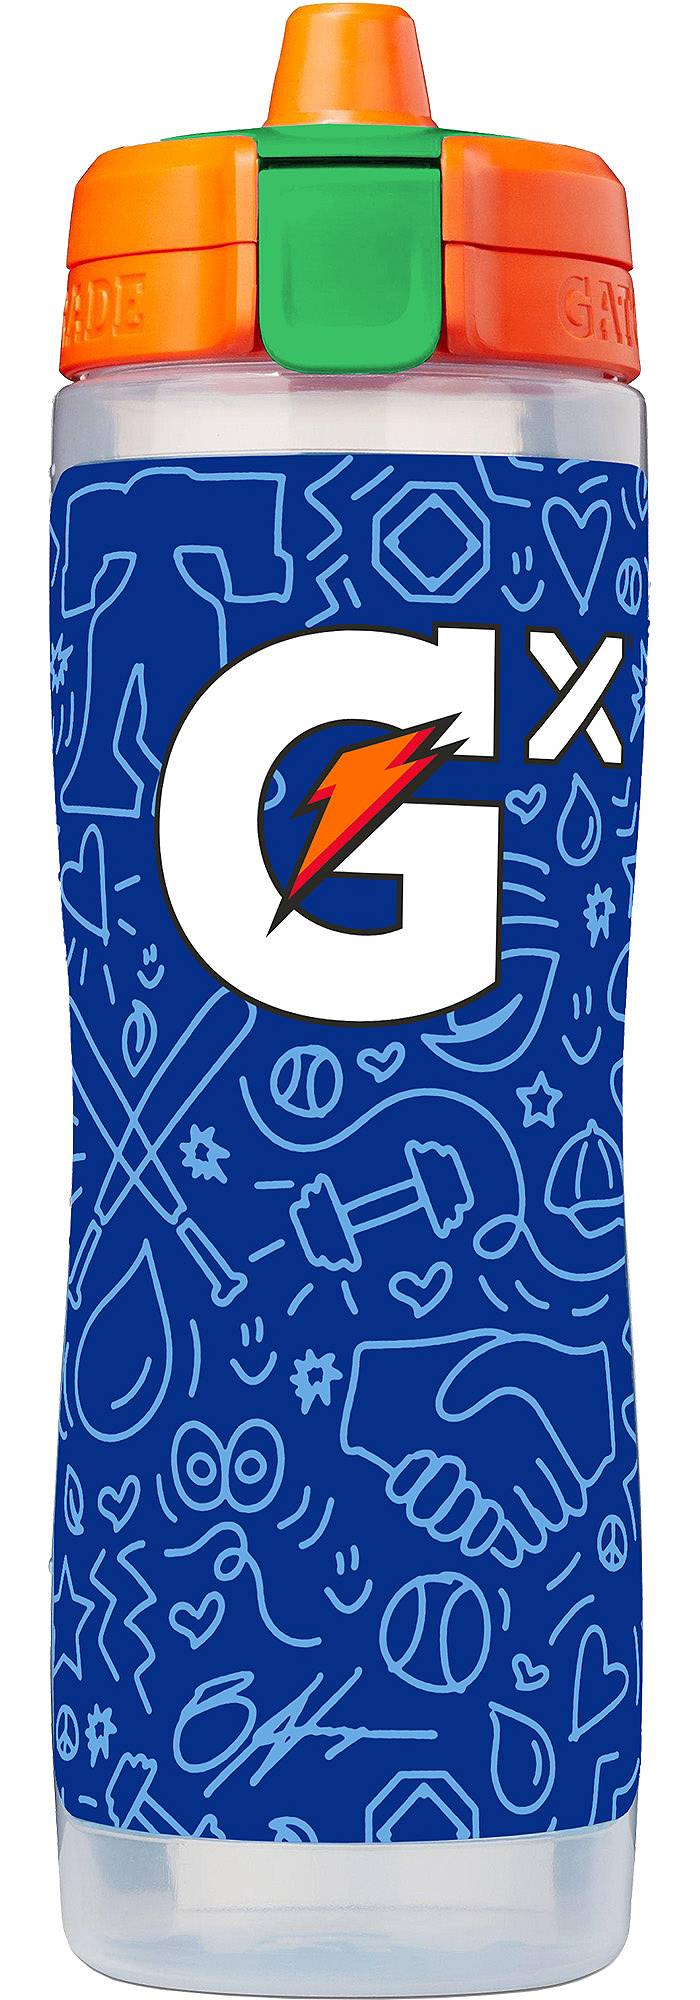 Gatorade GX 30 oz. Bottle, Glitched Berry Blue